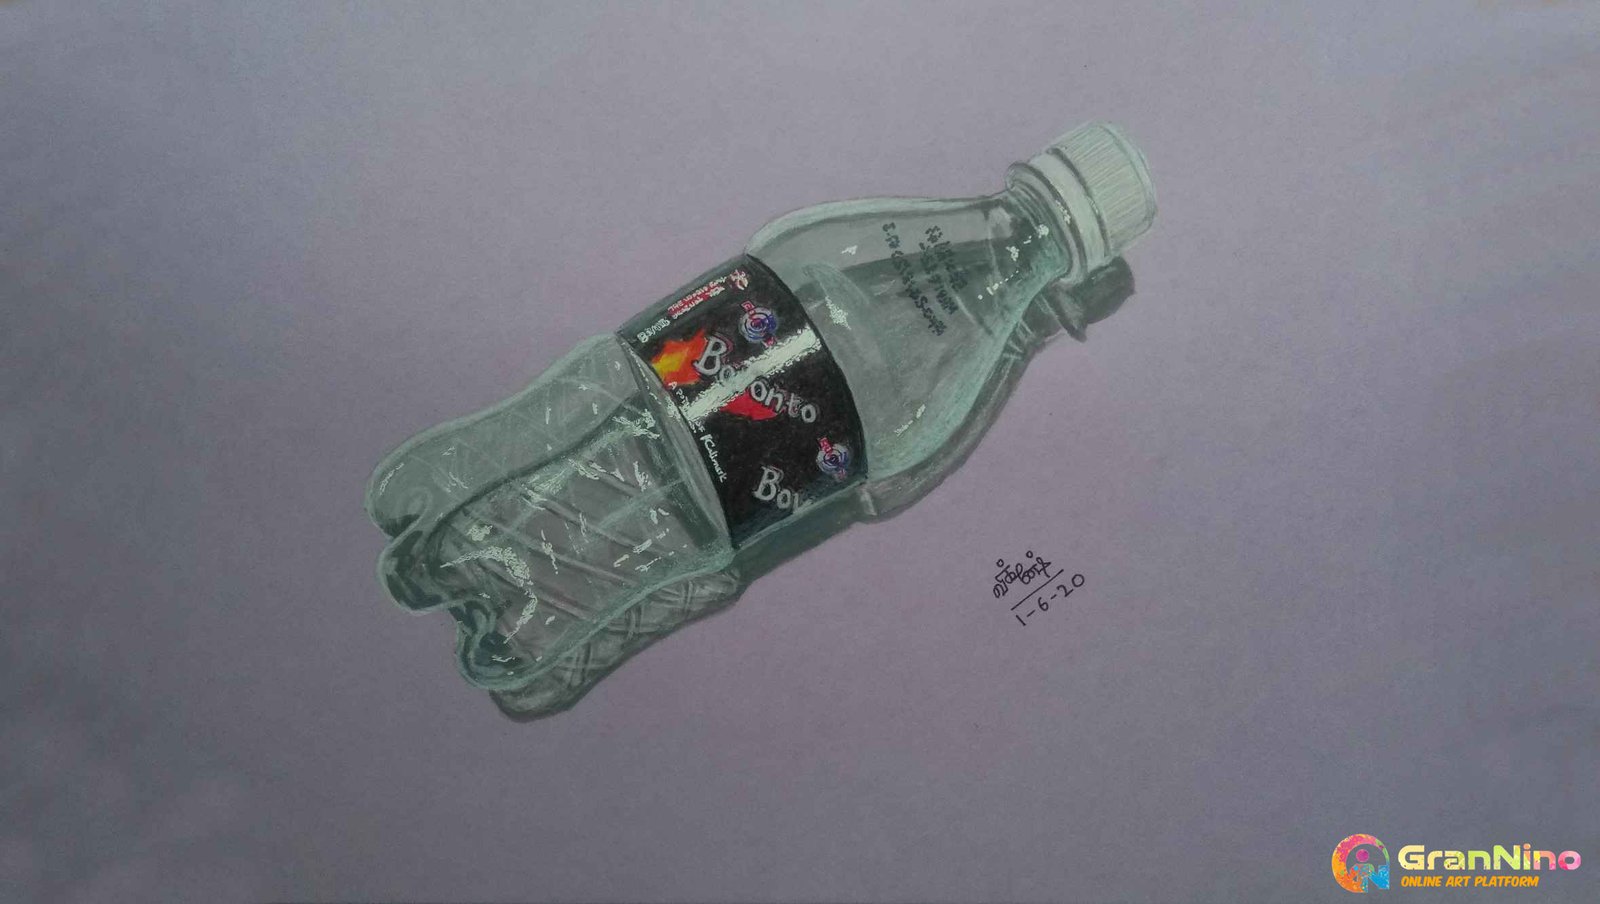 Plastic bottle drawing Vectors & Illustrations for Free Download | Freepik